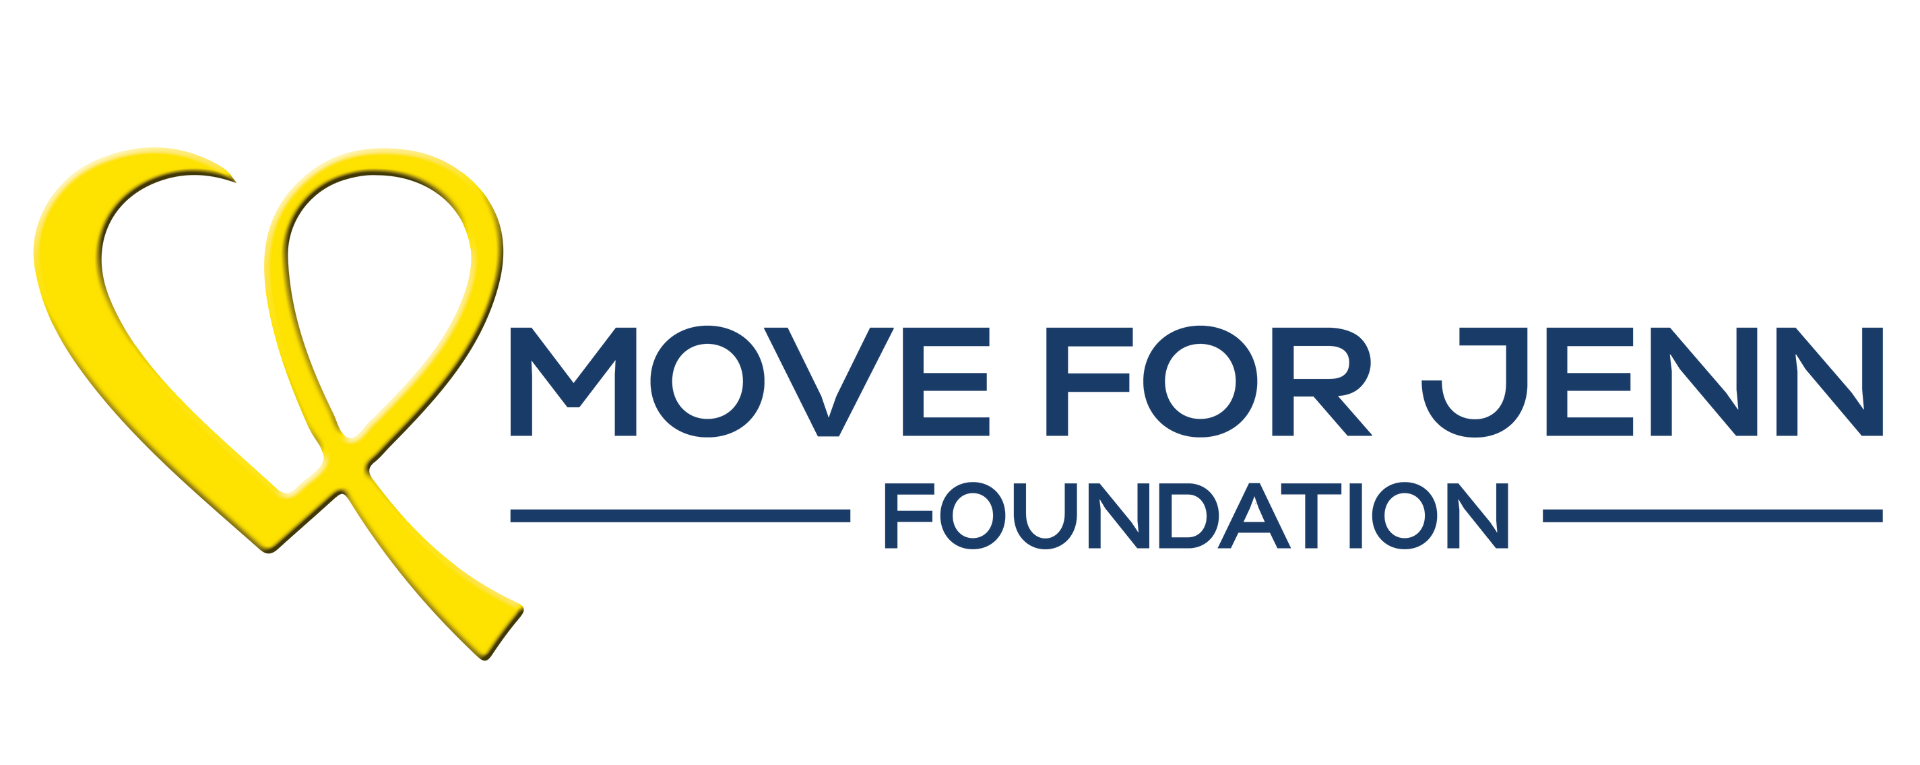 Move For Jenn Foundation logo